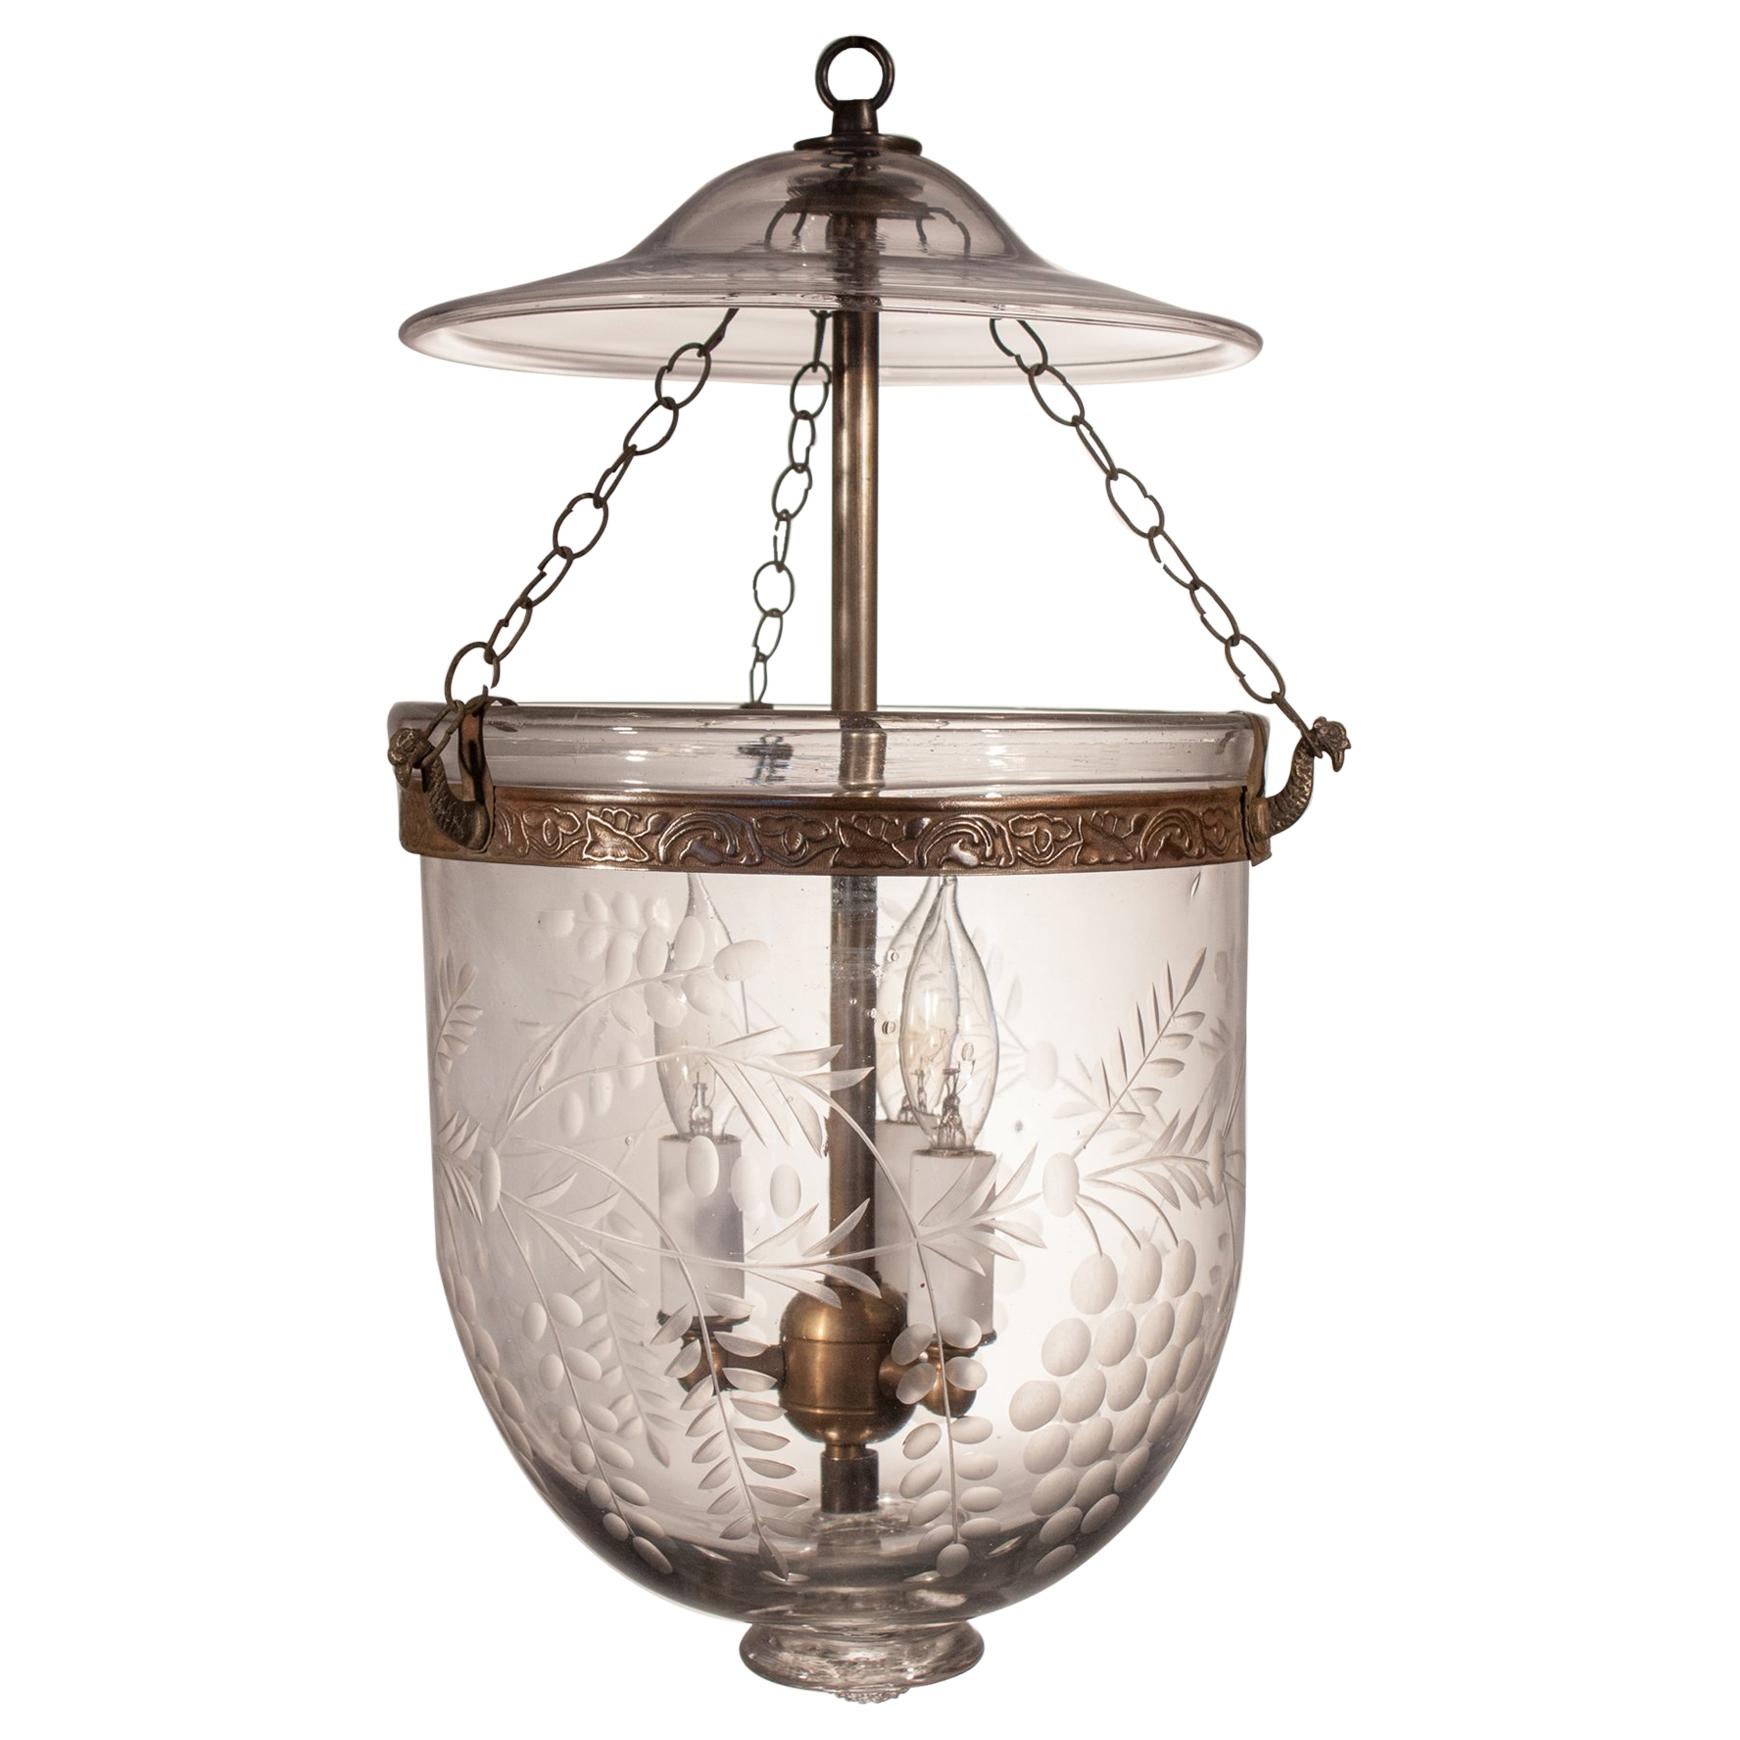  Bell Jar Lantern with Grape Vine Etching